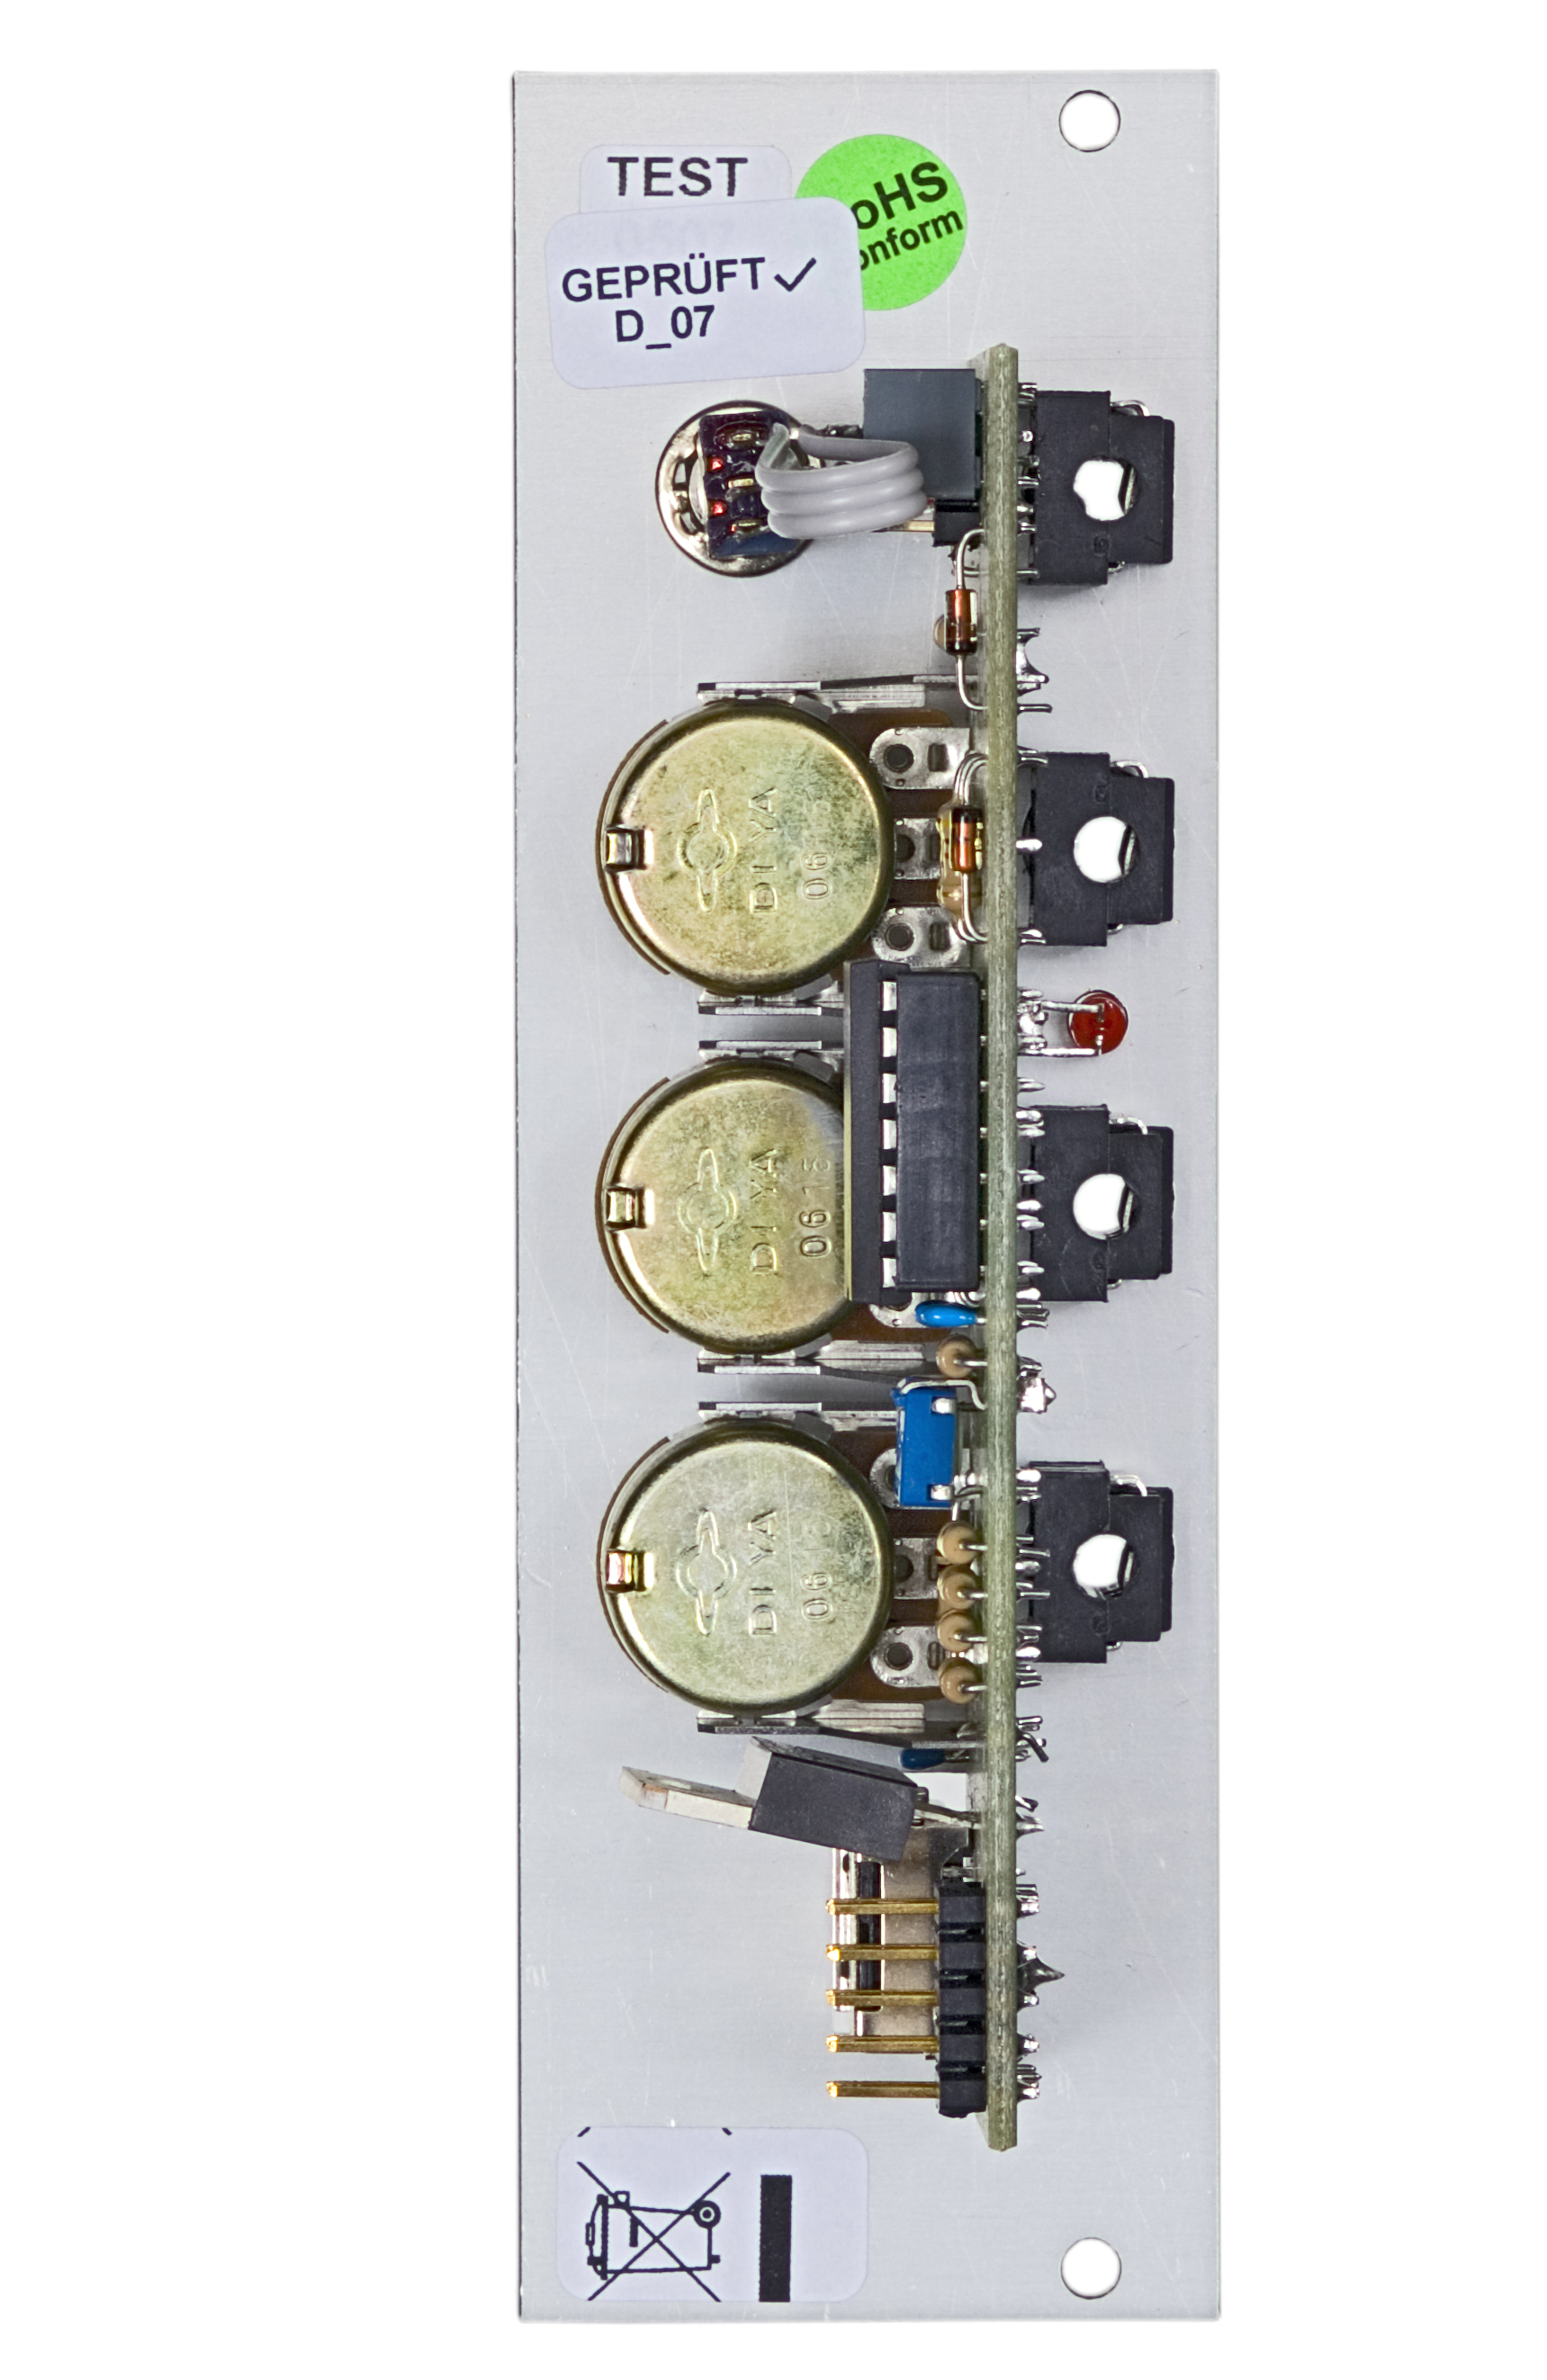 A-198 Modul & Manual Trautonium Controller